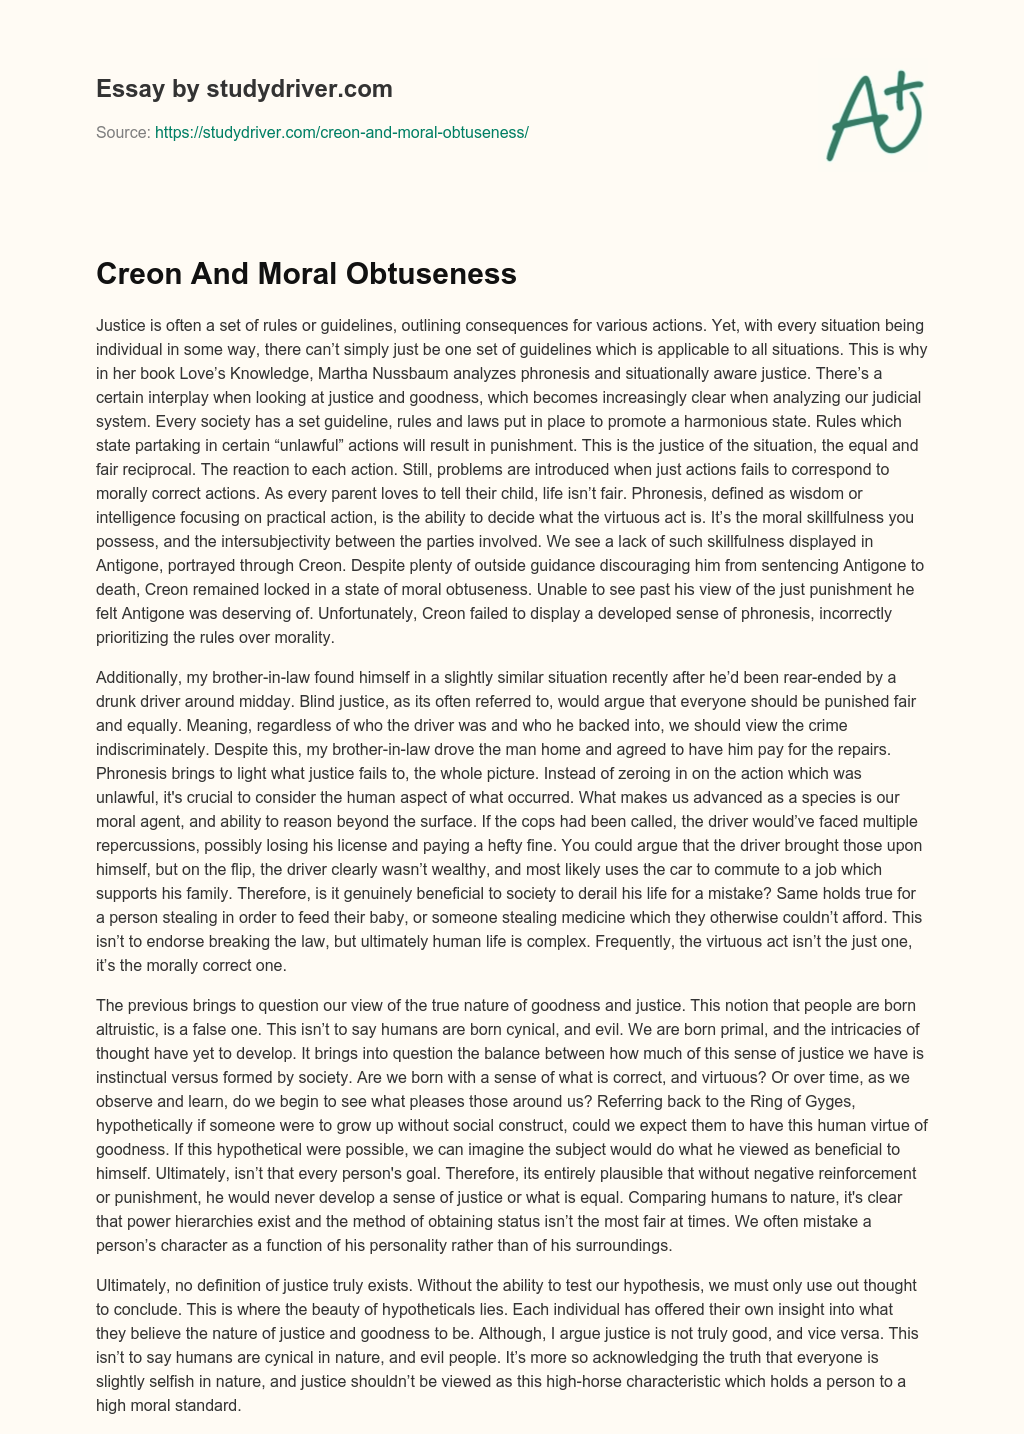 Creon and Moral Obtuseness essay